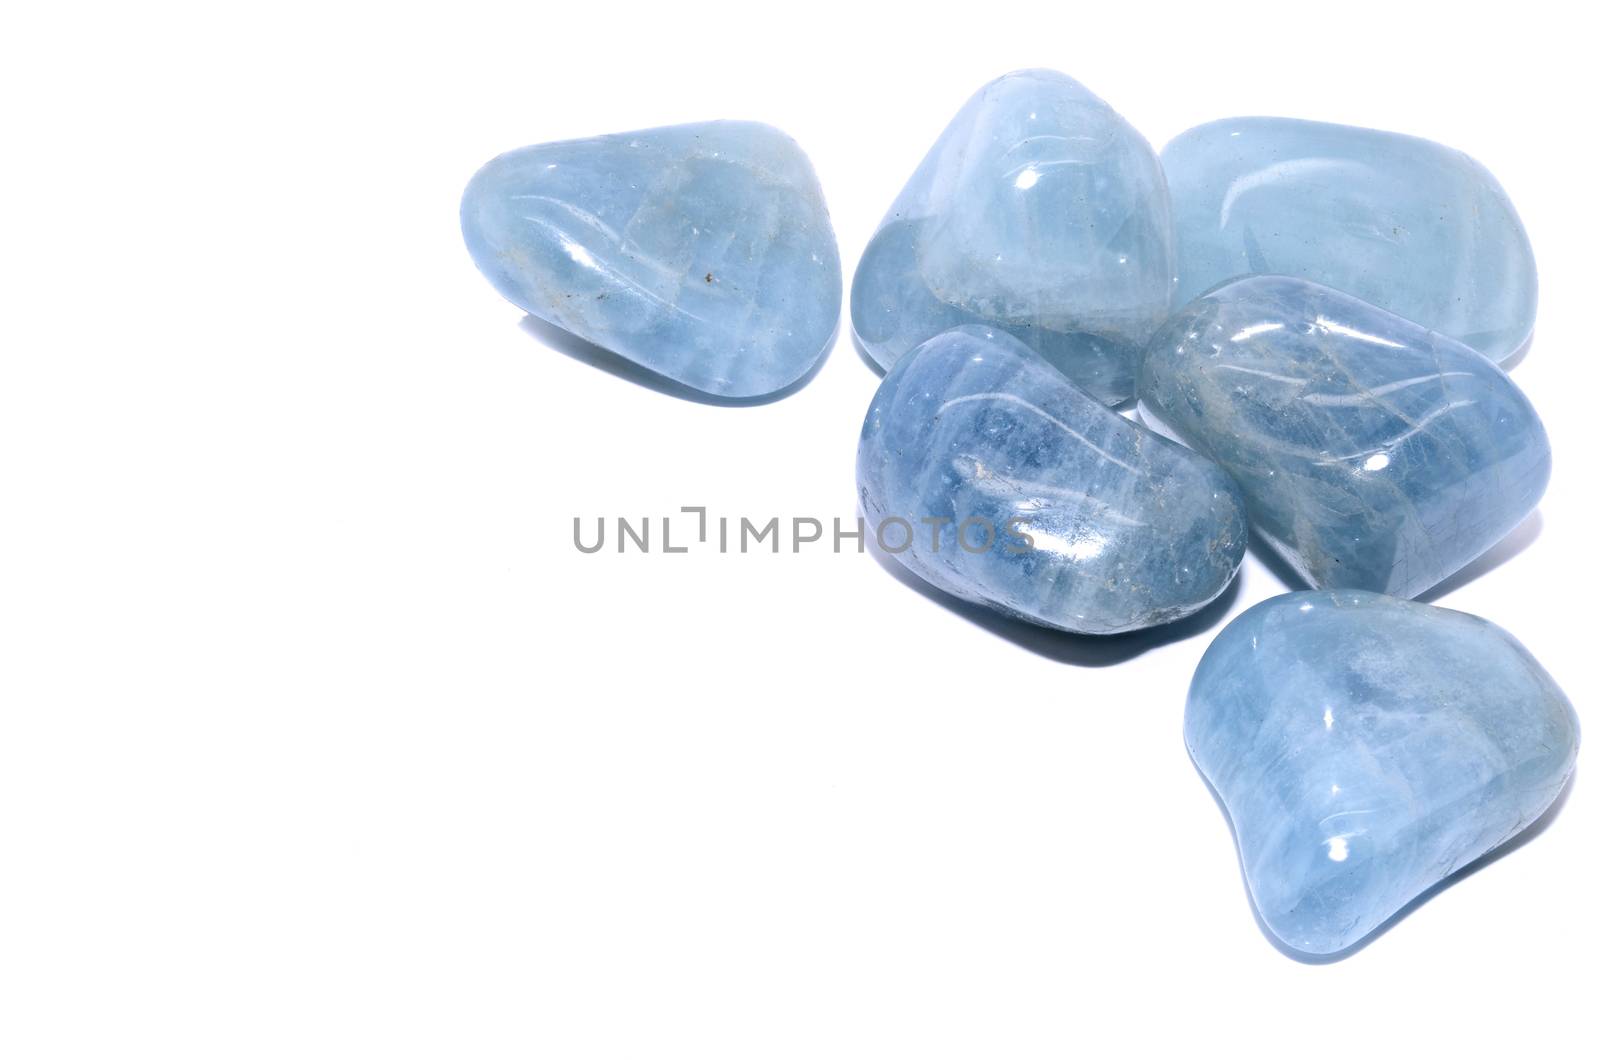 Set of a beautiful tumbled Aquamarine semiprecious stones isolated on white